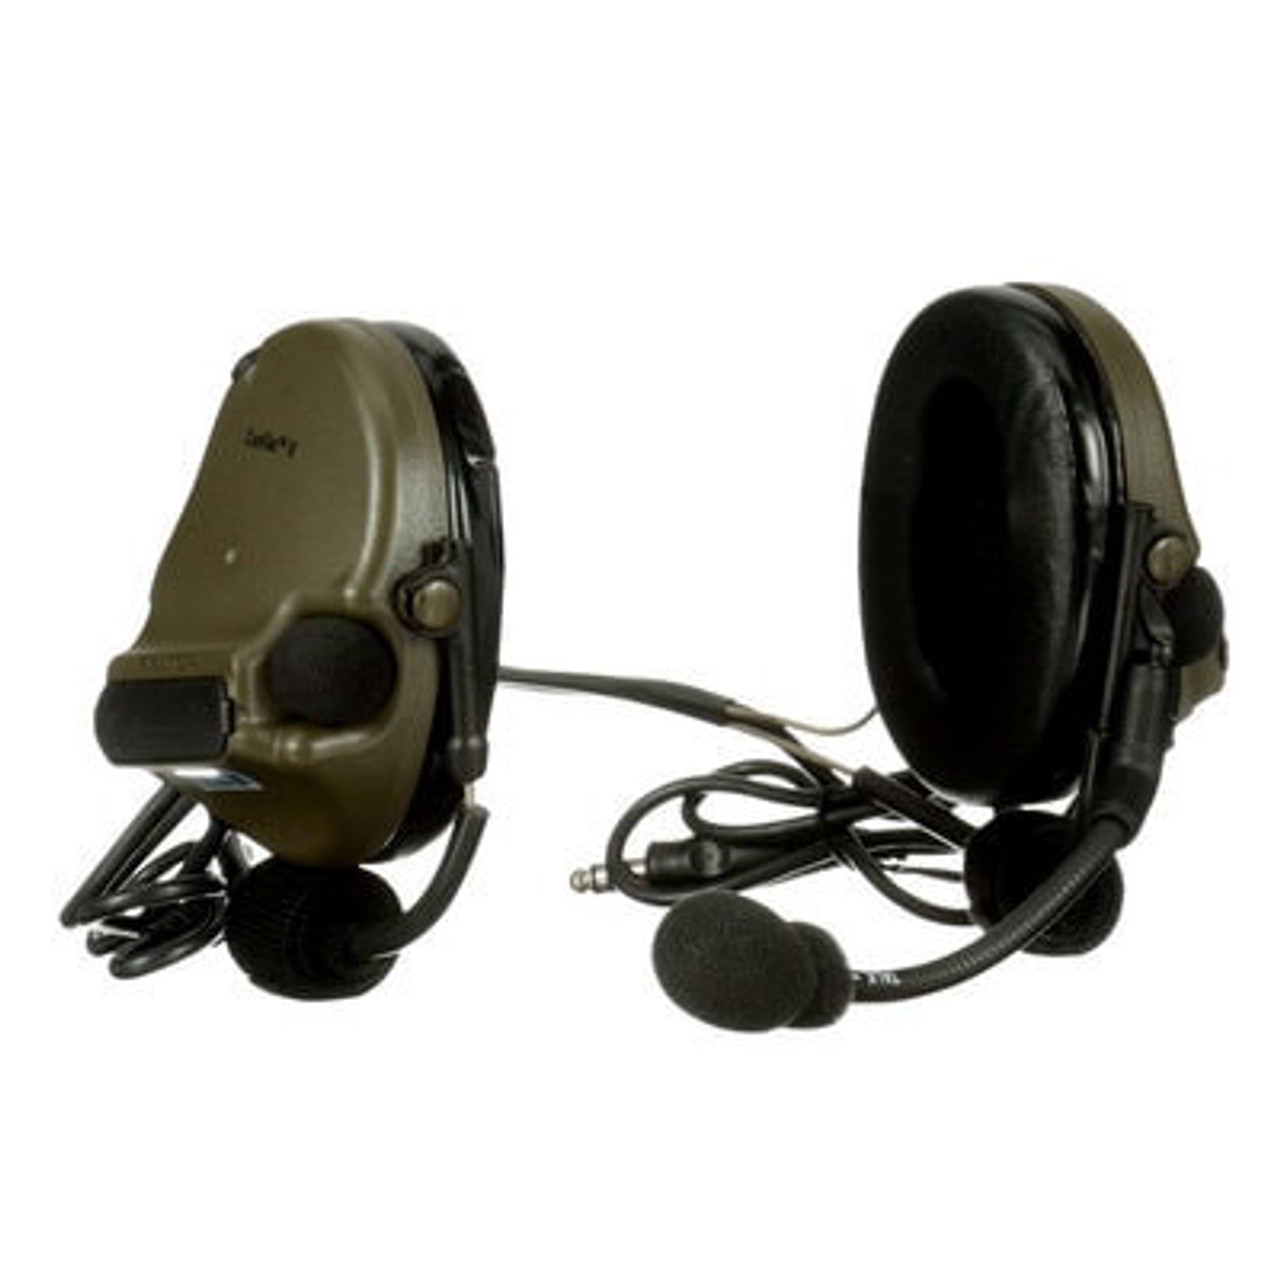 PELTOR® 3M® ComTac XPI Standard Electronic protective over-ear